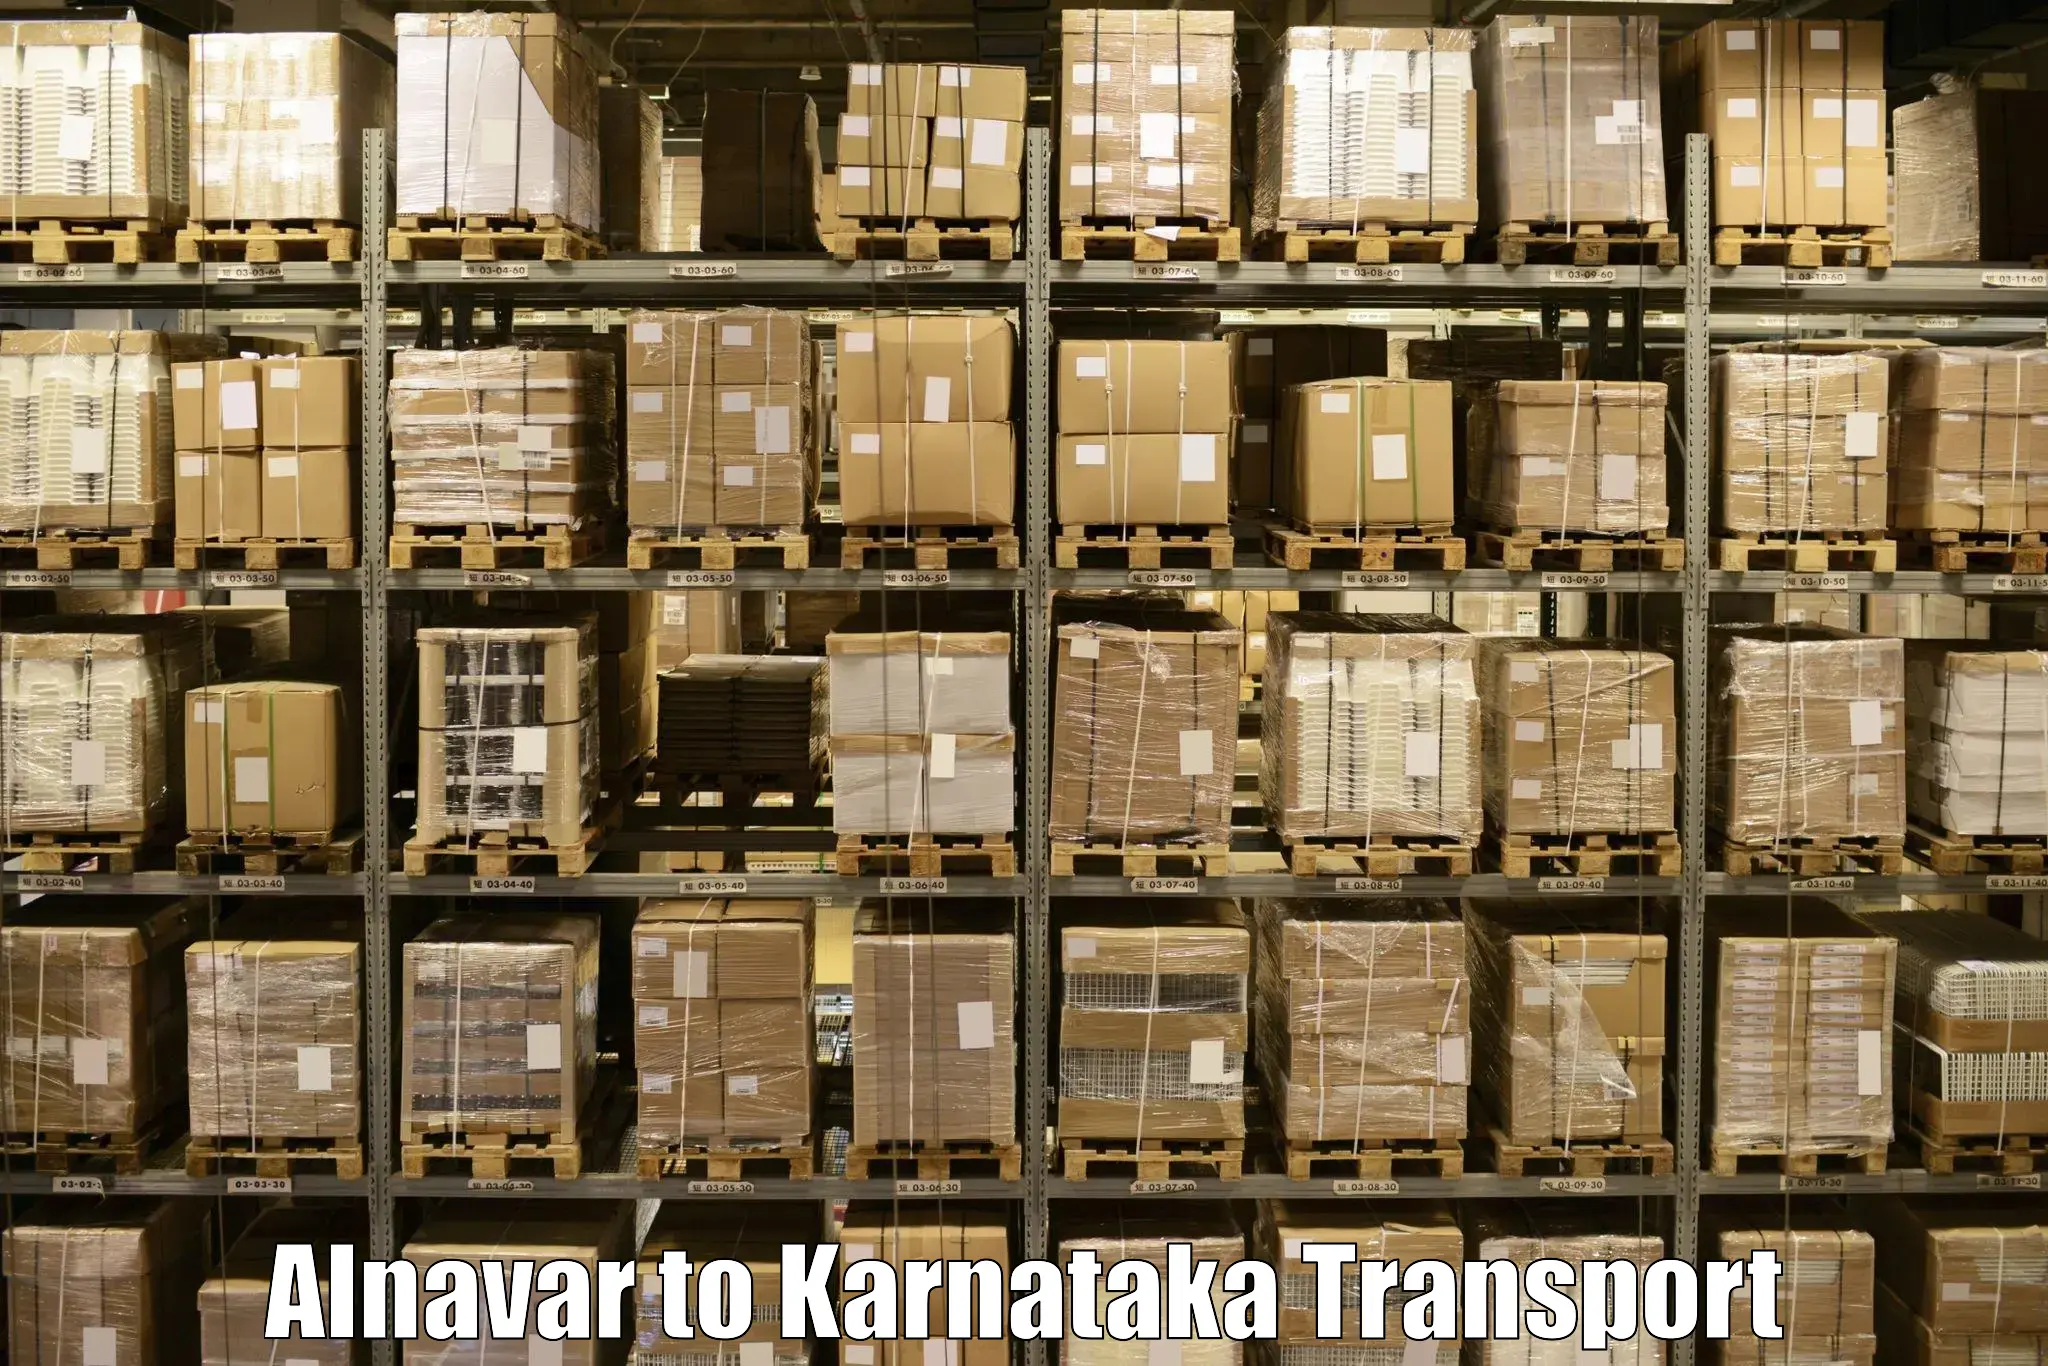 Delivery service Alnavar to Ramanathapura